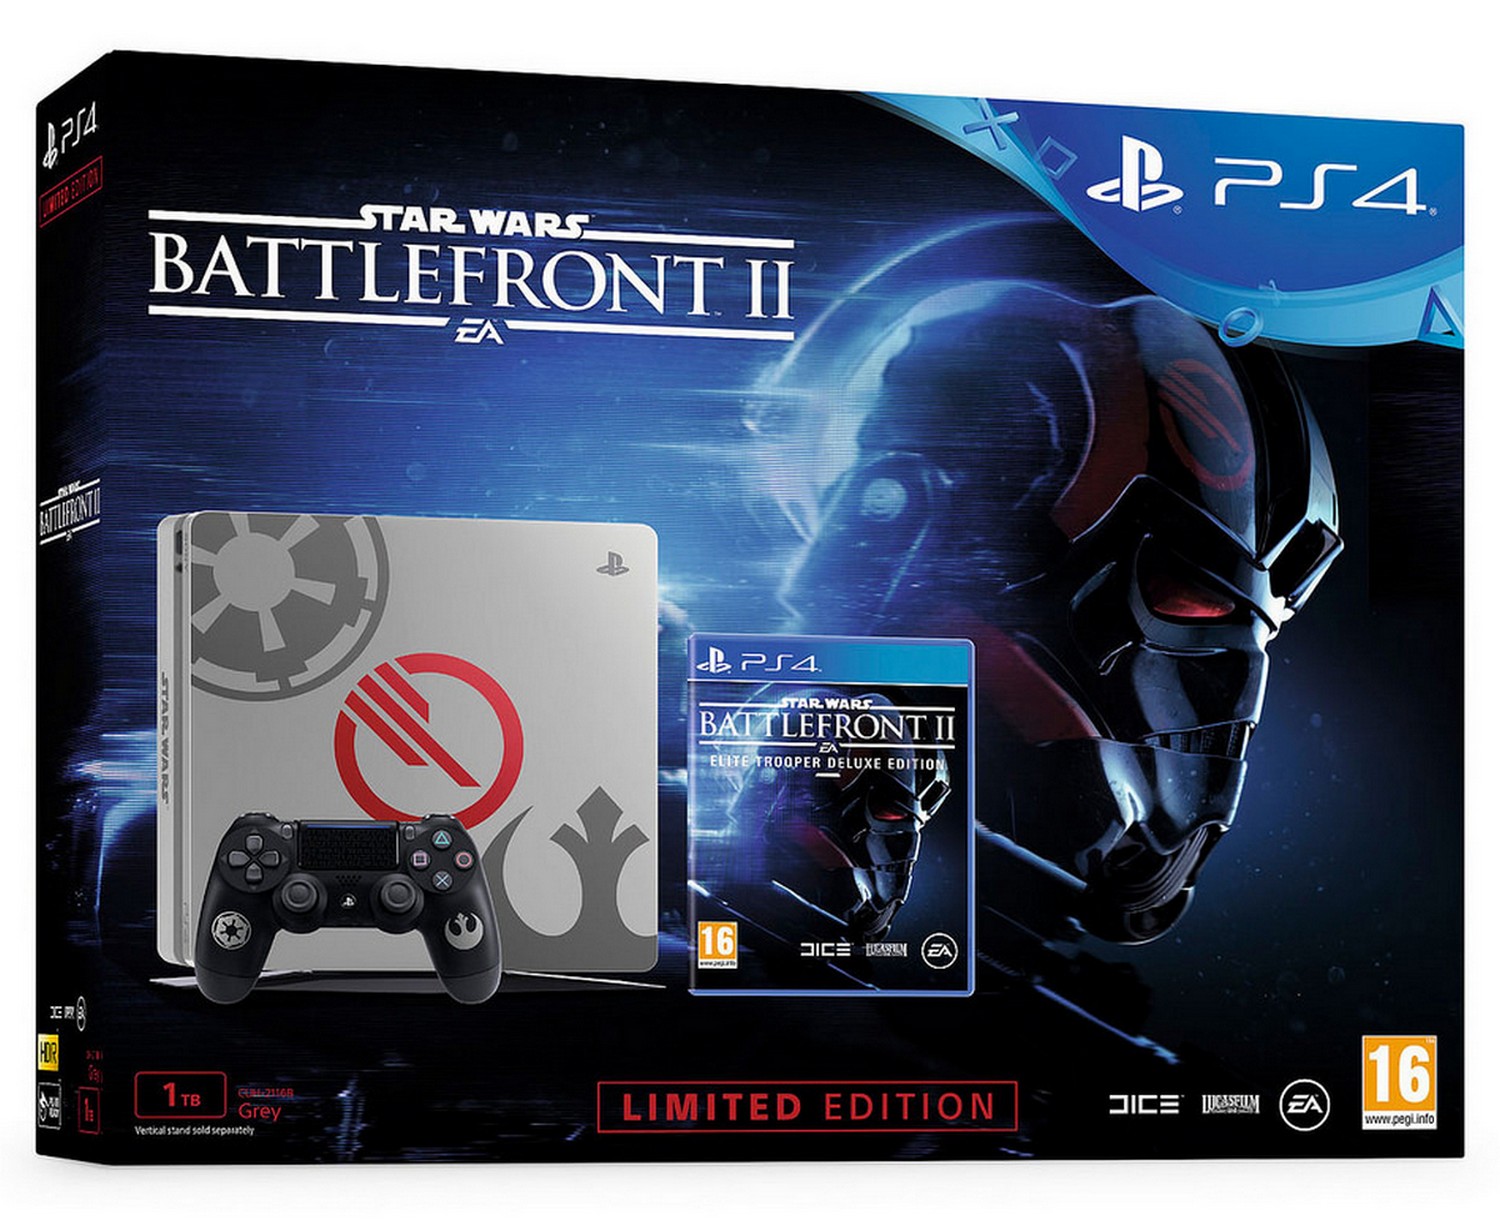 PlayStation 4 Slim 1 TB - Star Wars Battlefront II Limited Edtion